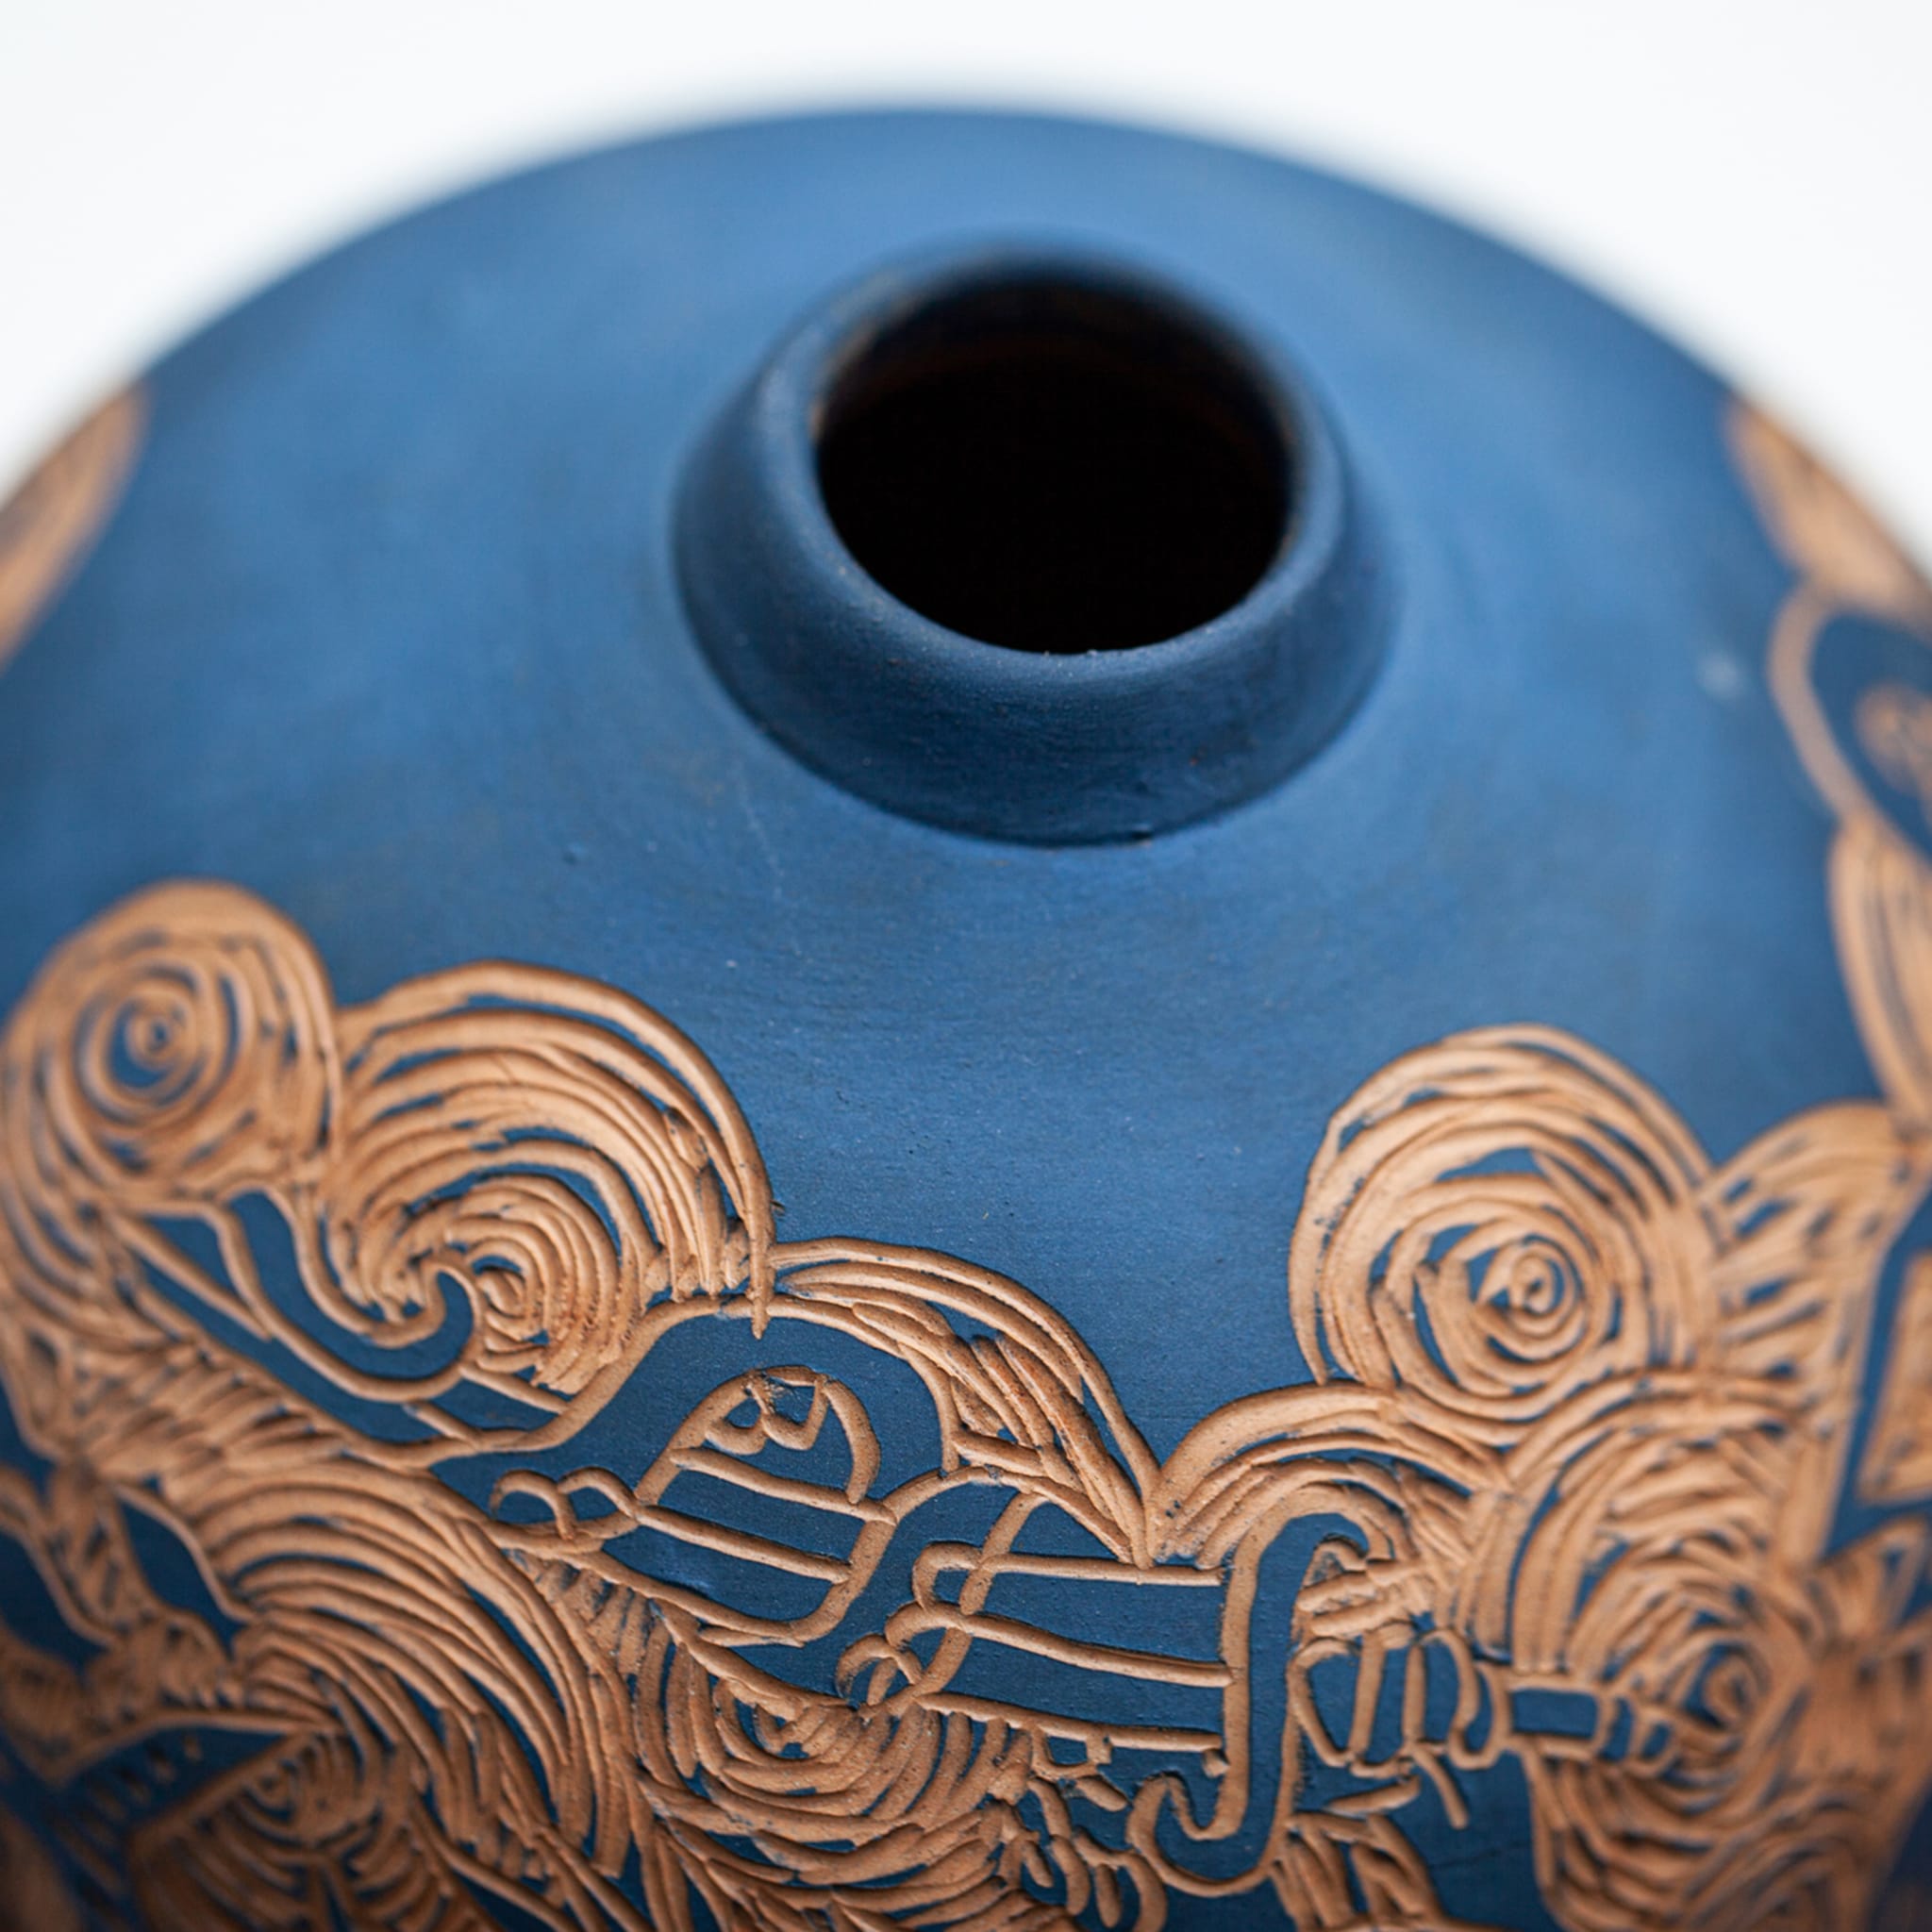 La Sirena Guerriera Blue Vase by Clara Holt and Chiara Zoppei - Alternative view 5